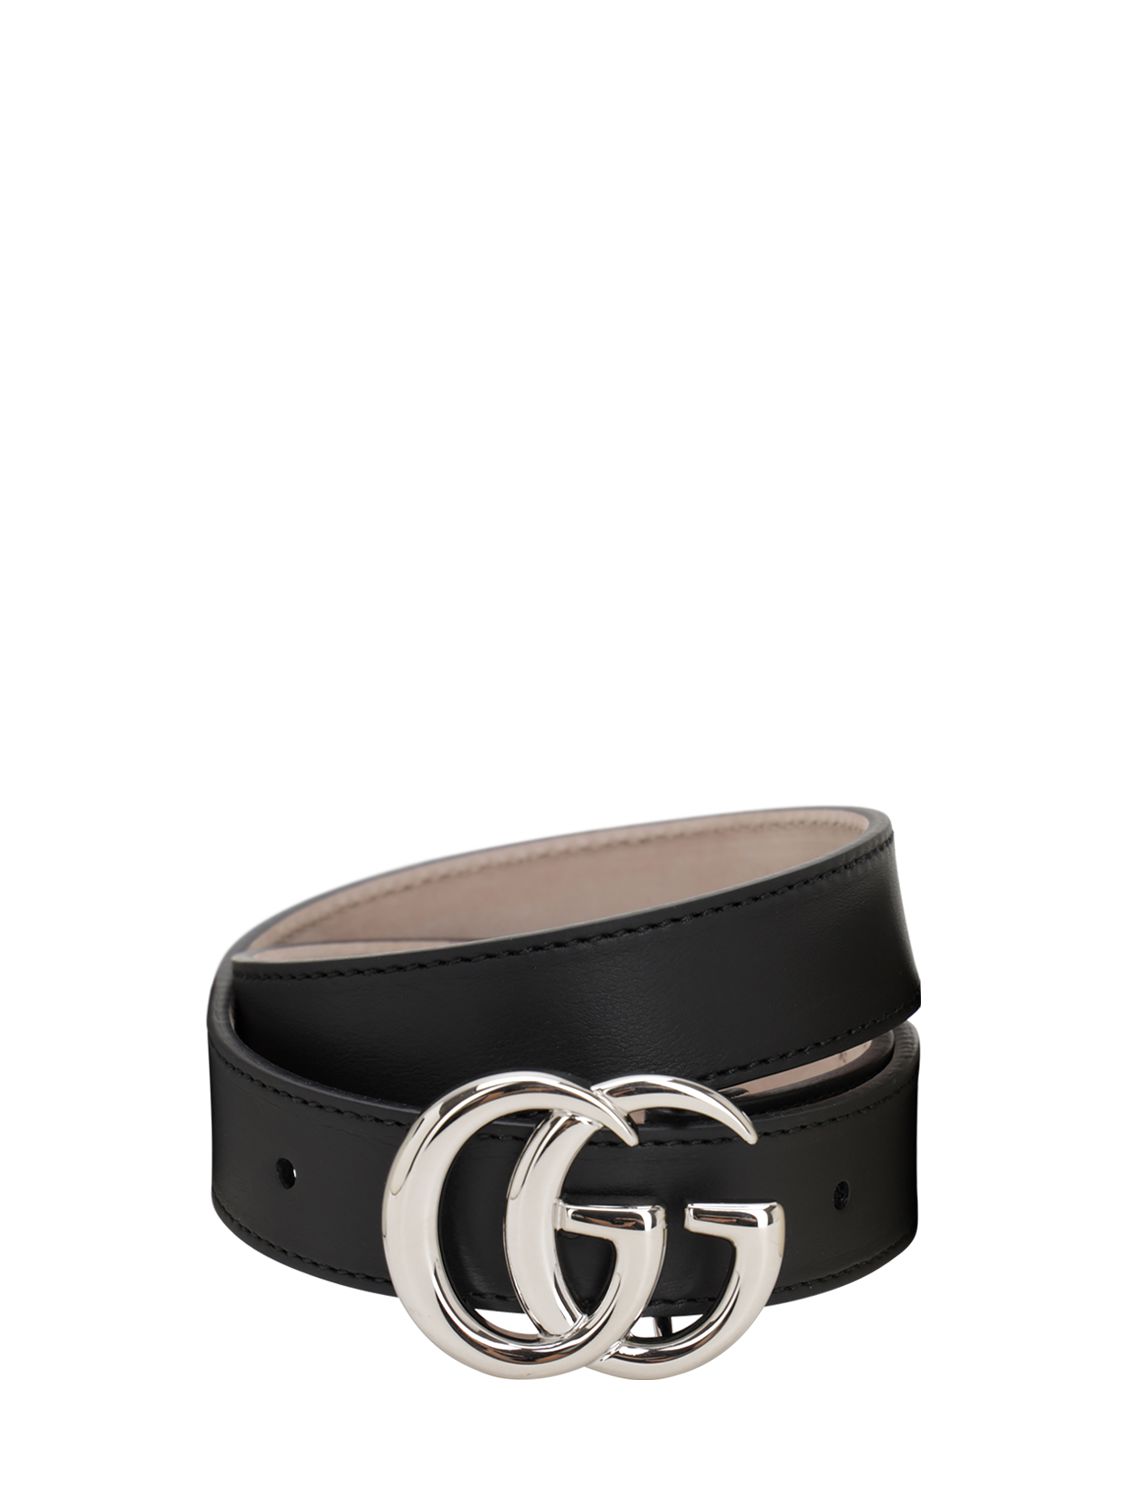 Gg Leather Belt